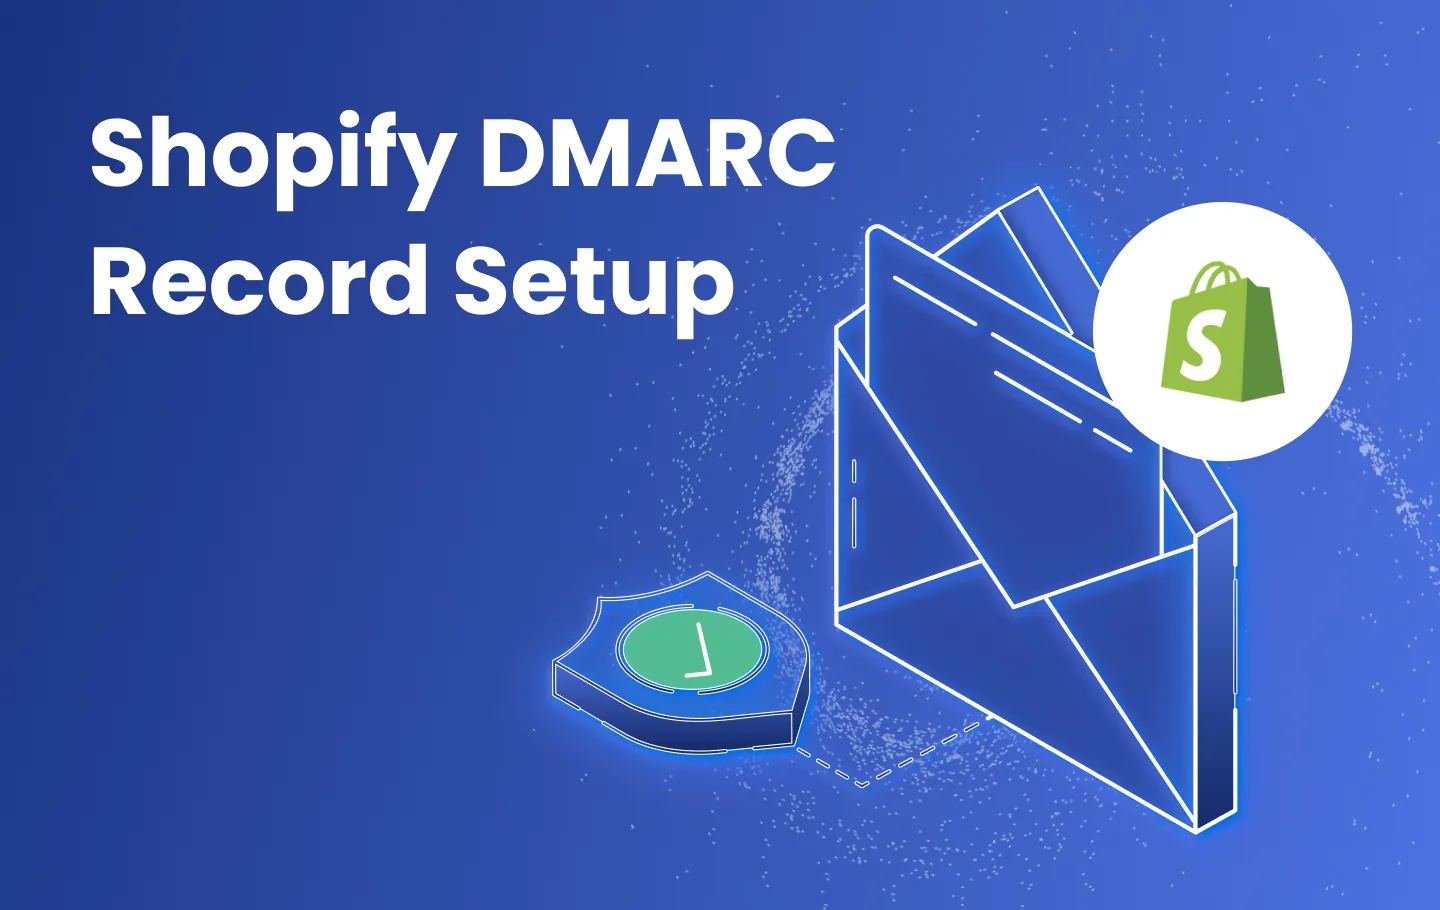 Shopify DMARC Record Setup